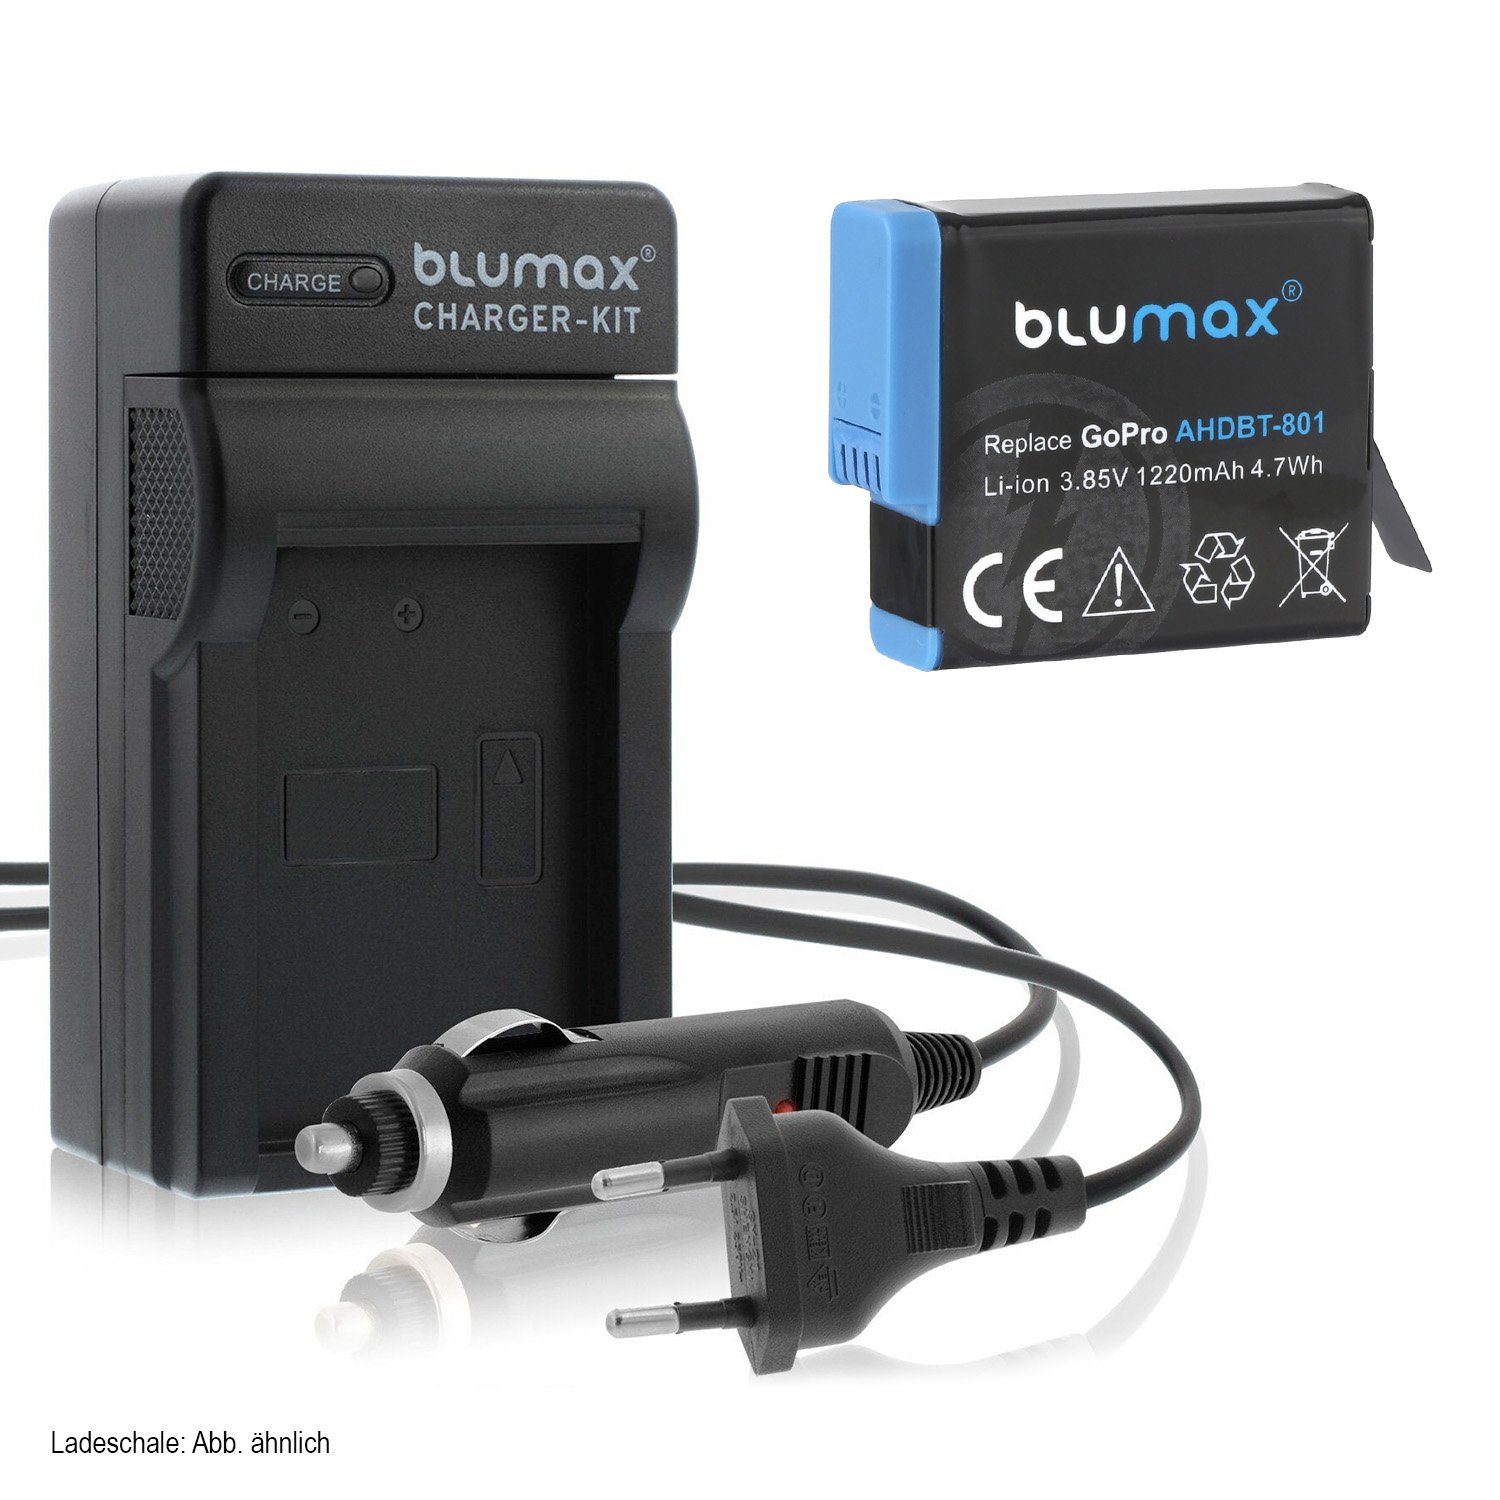 Blumax Set mit Lader für GoPro Hero AHDBT-801, 1220 mAh Kamera-Ladegerät